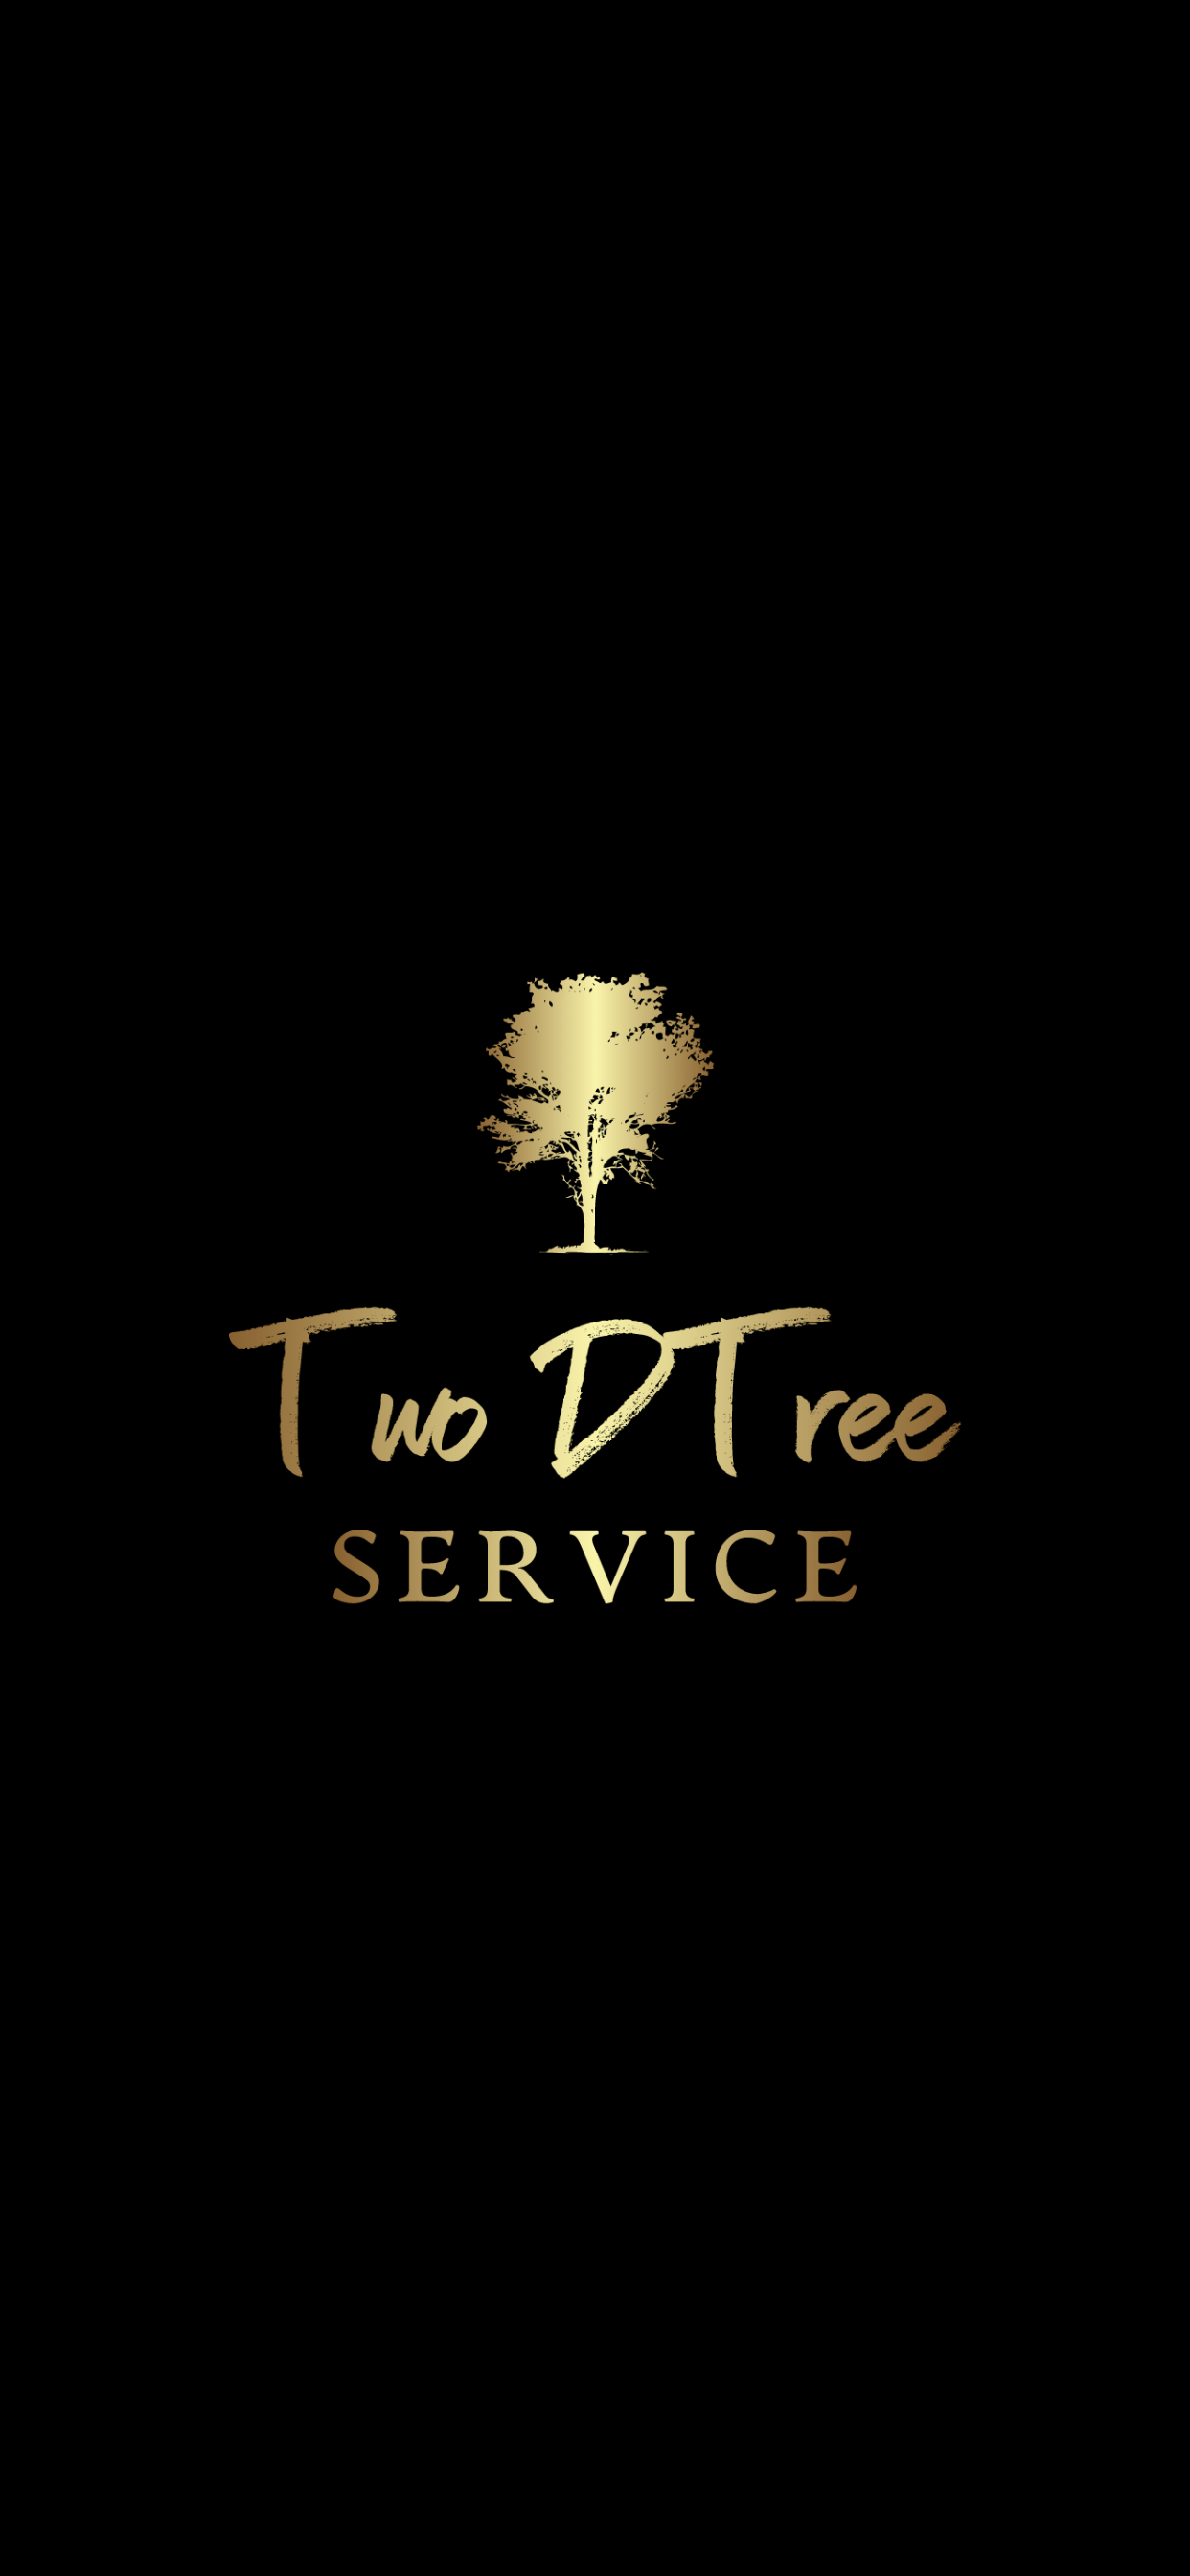 Two D Tree Service Logo